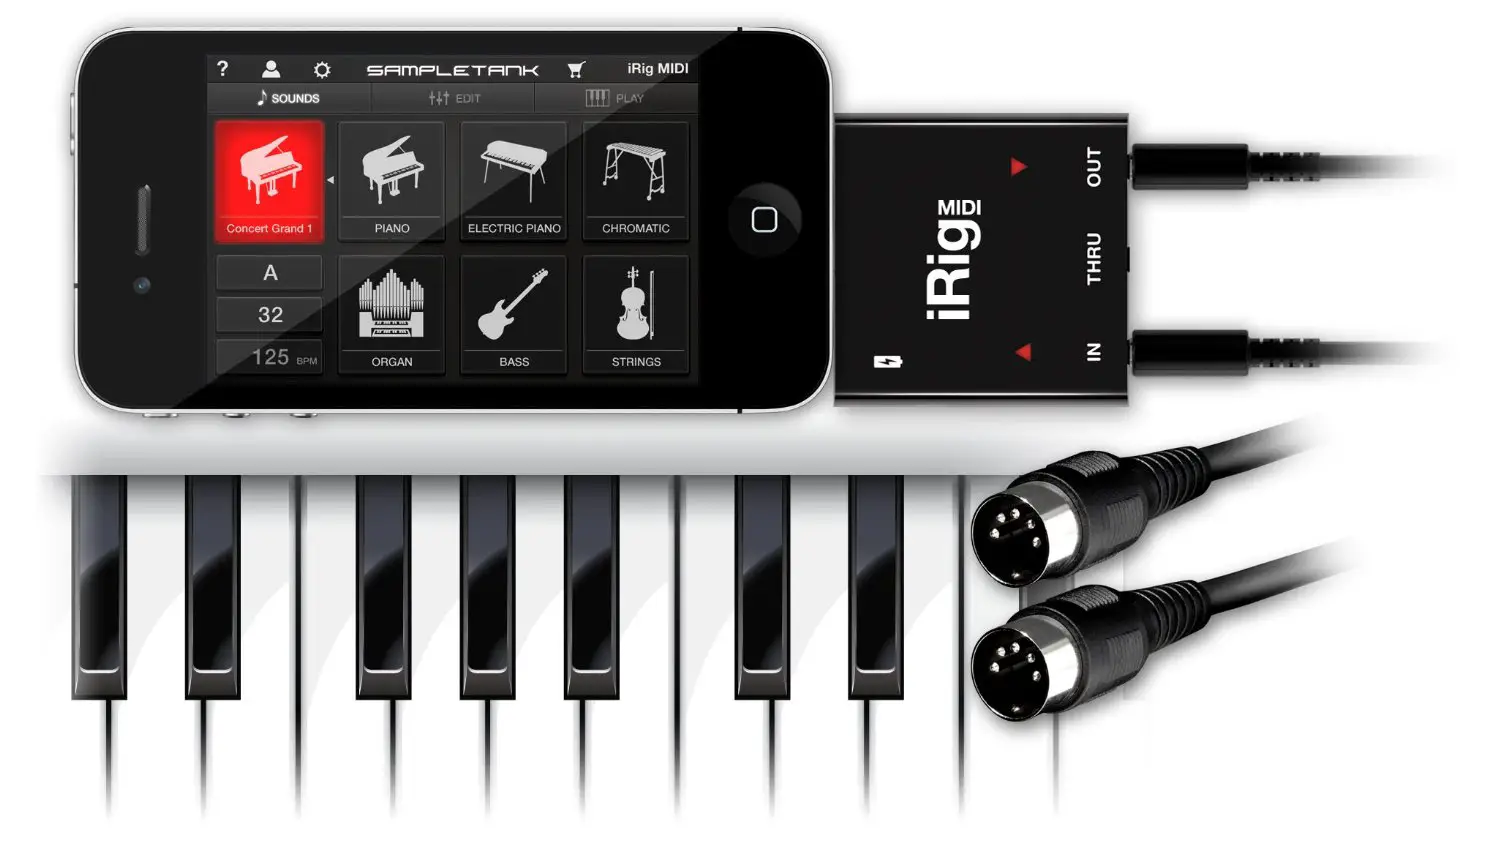 IK Multimedia iRig Midi 2 interface for iPhone/iPod touch/iPad